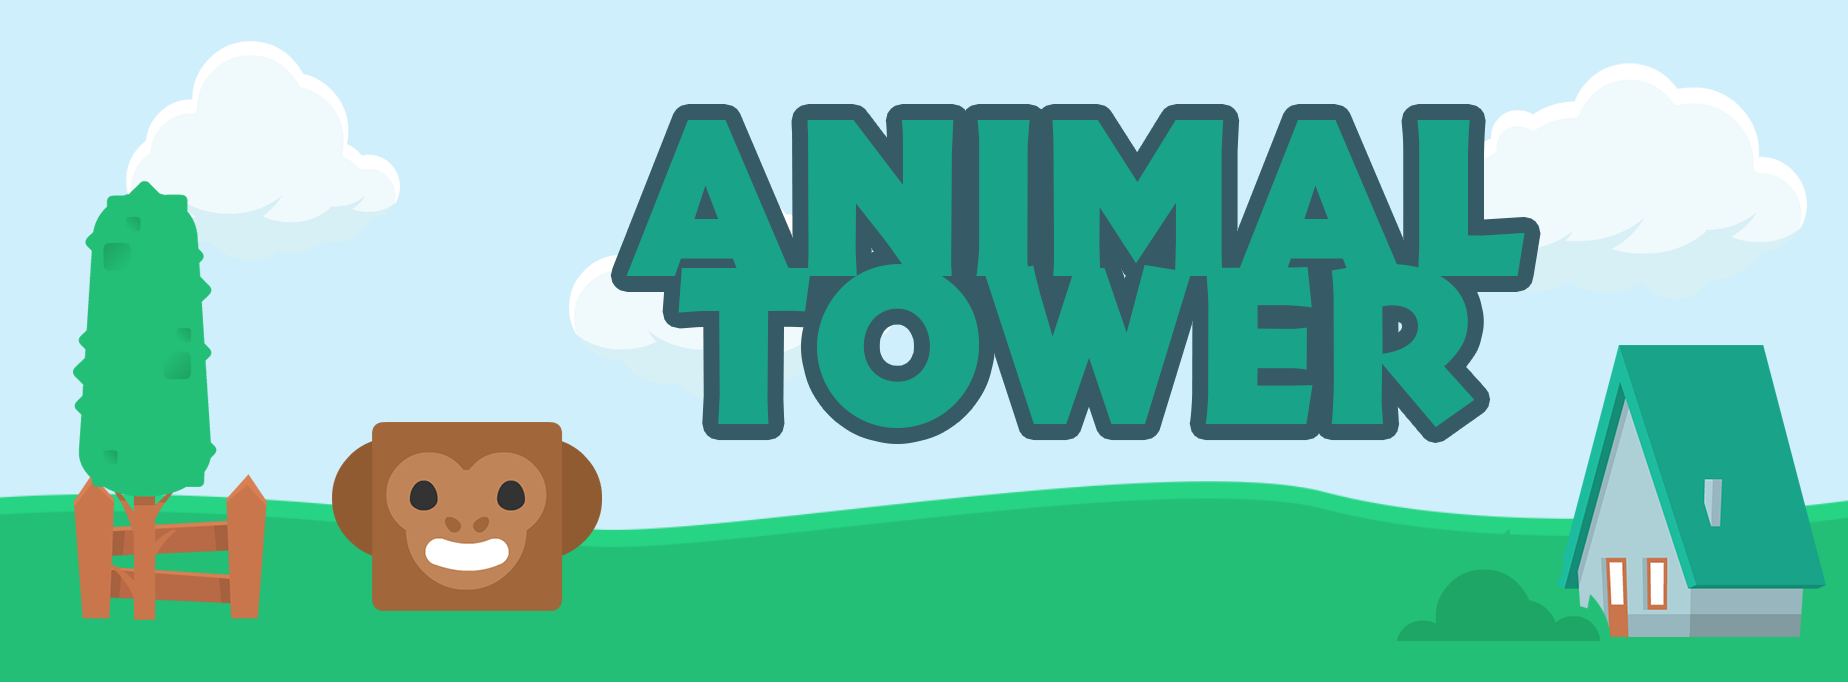 Animal tower